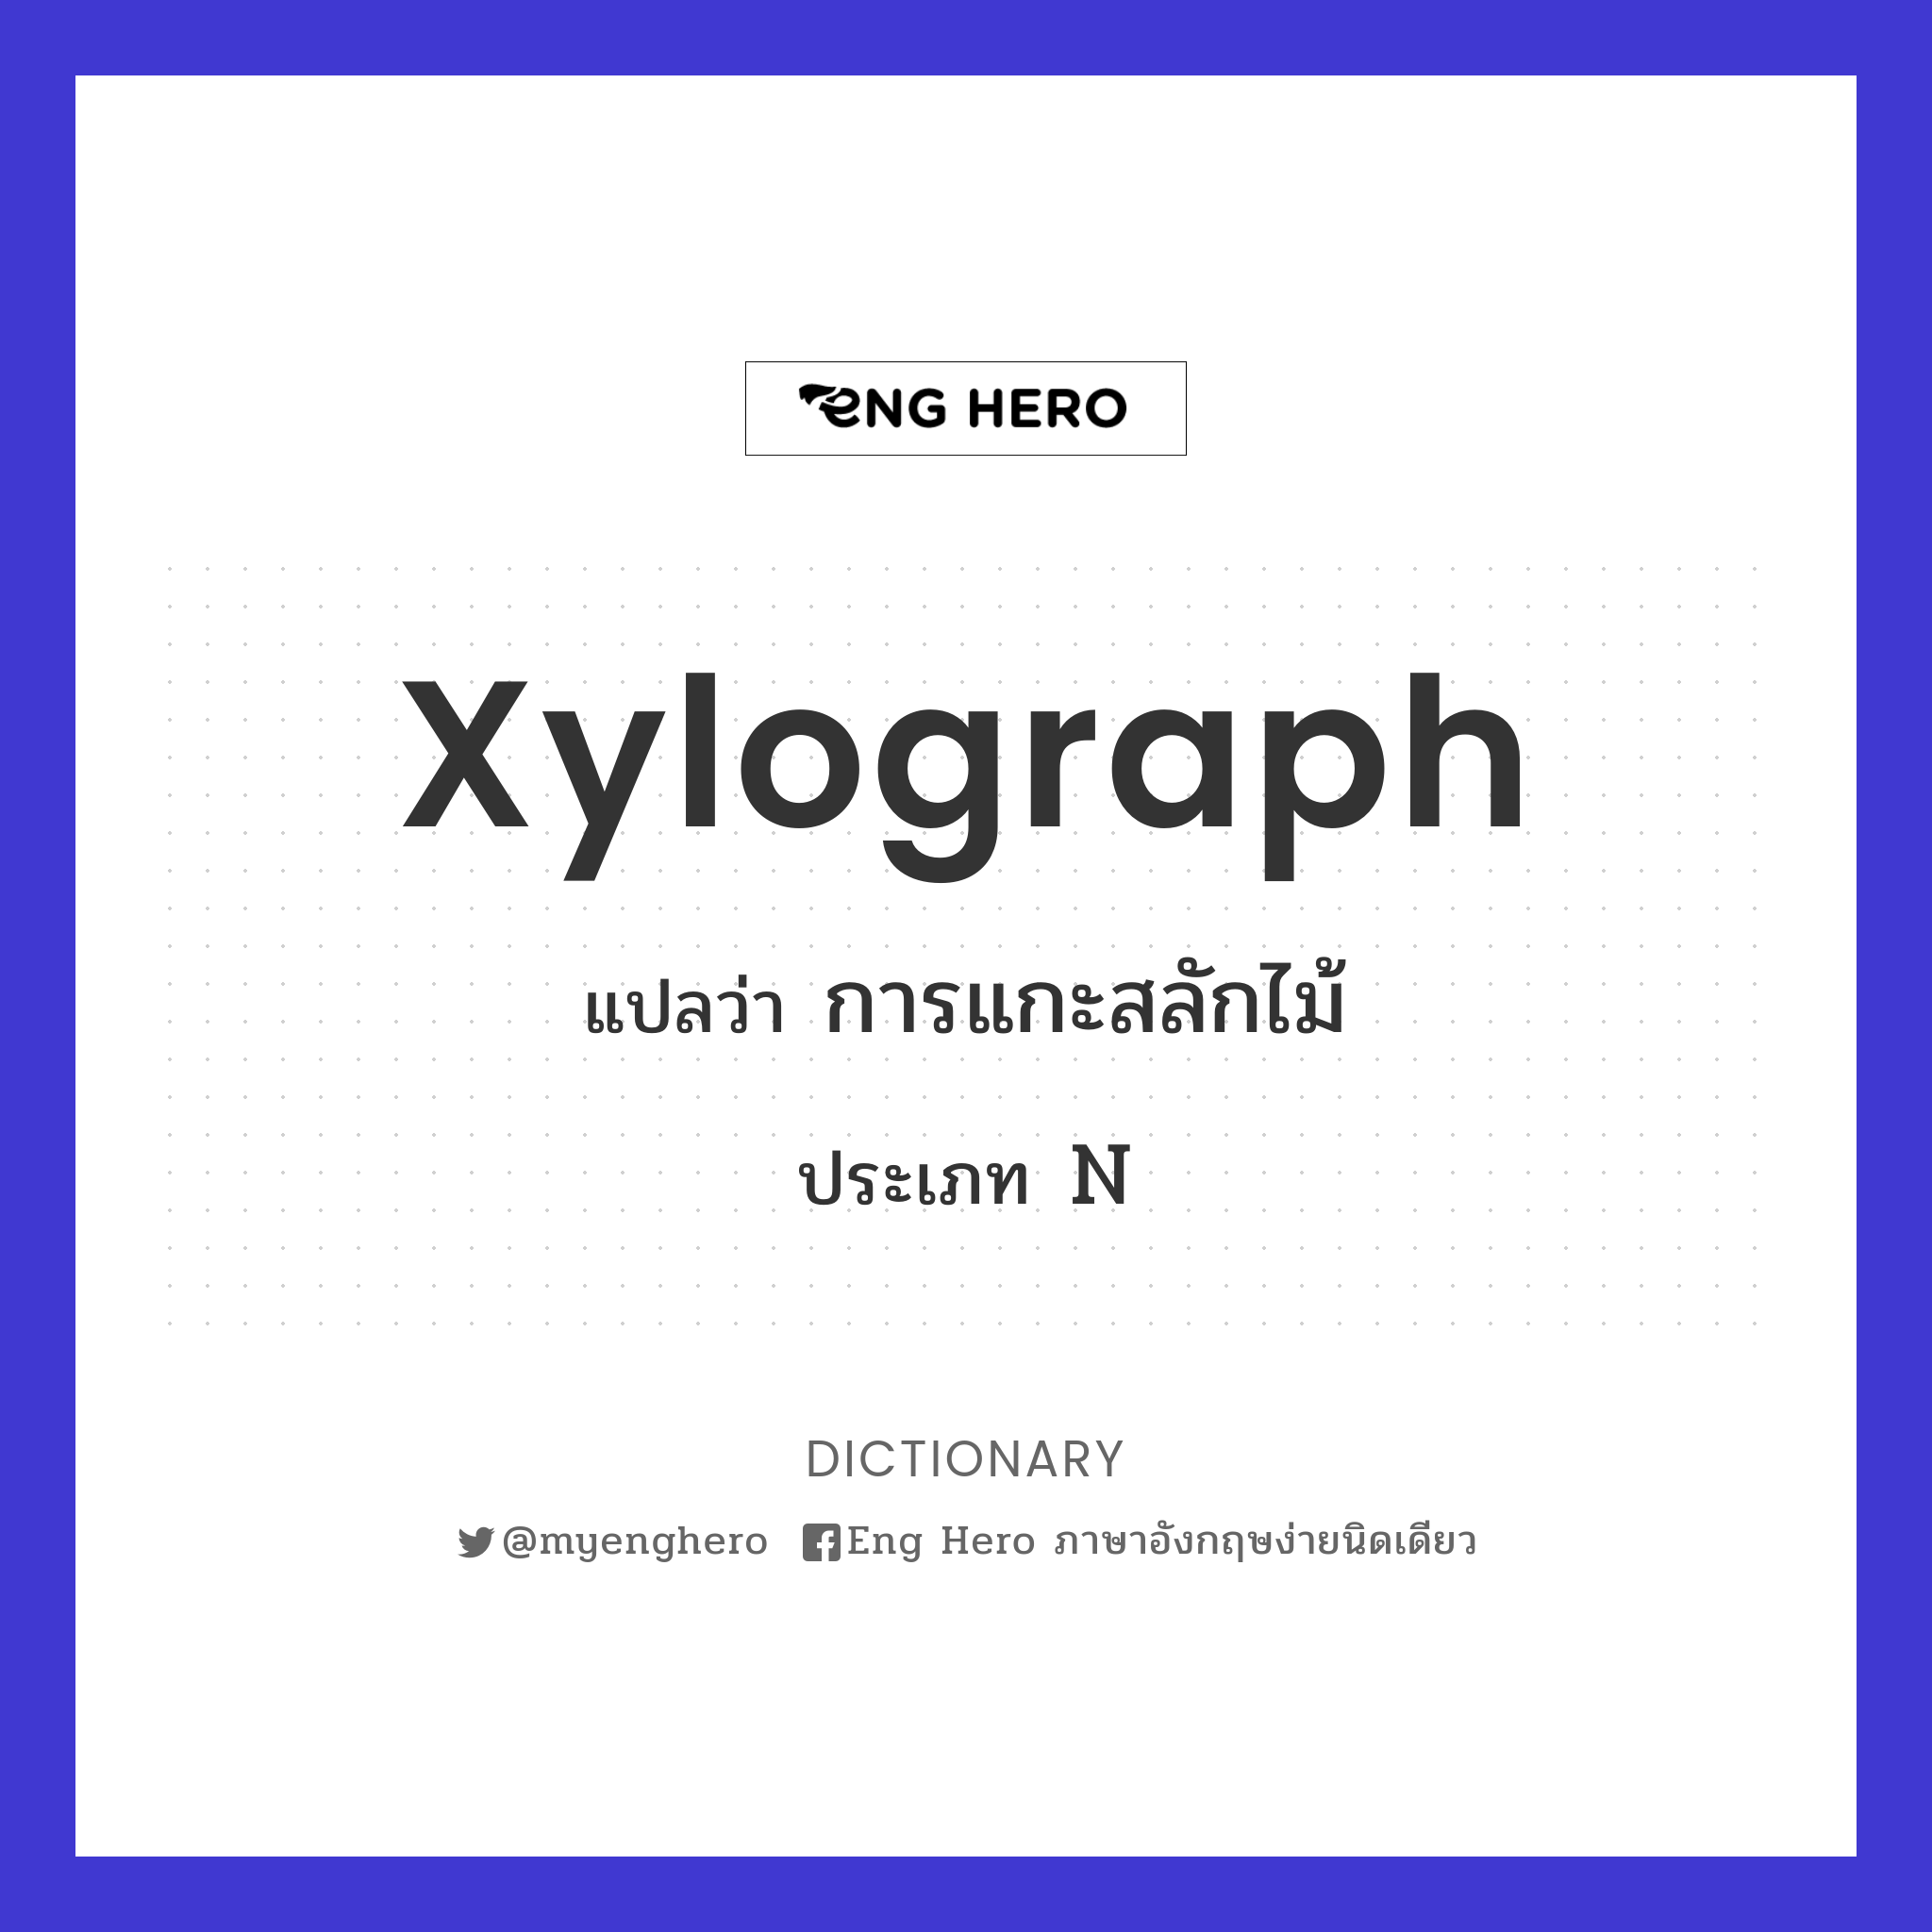 xylograph